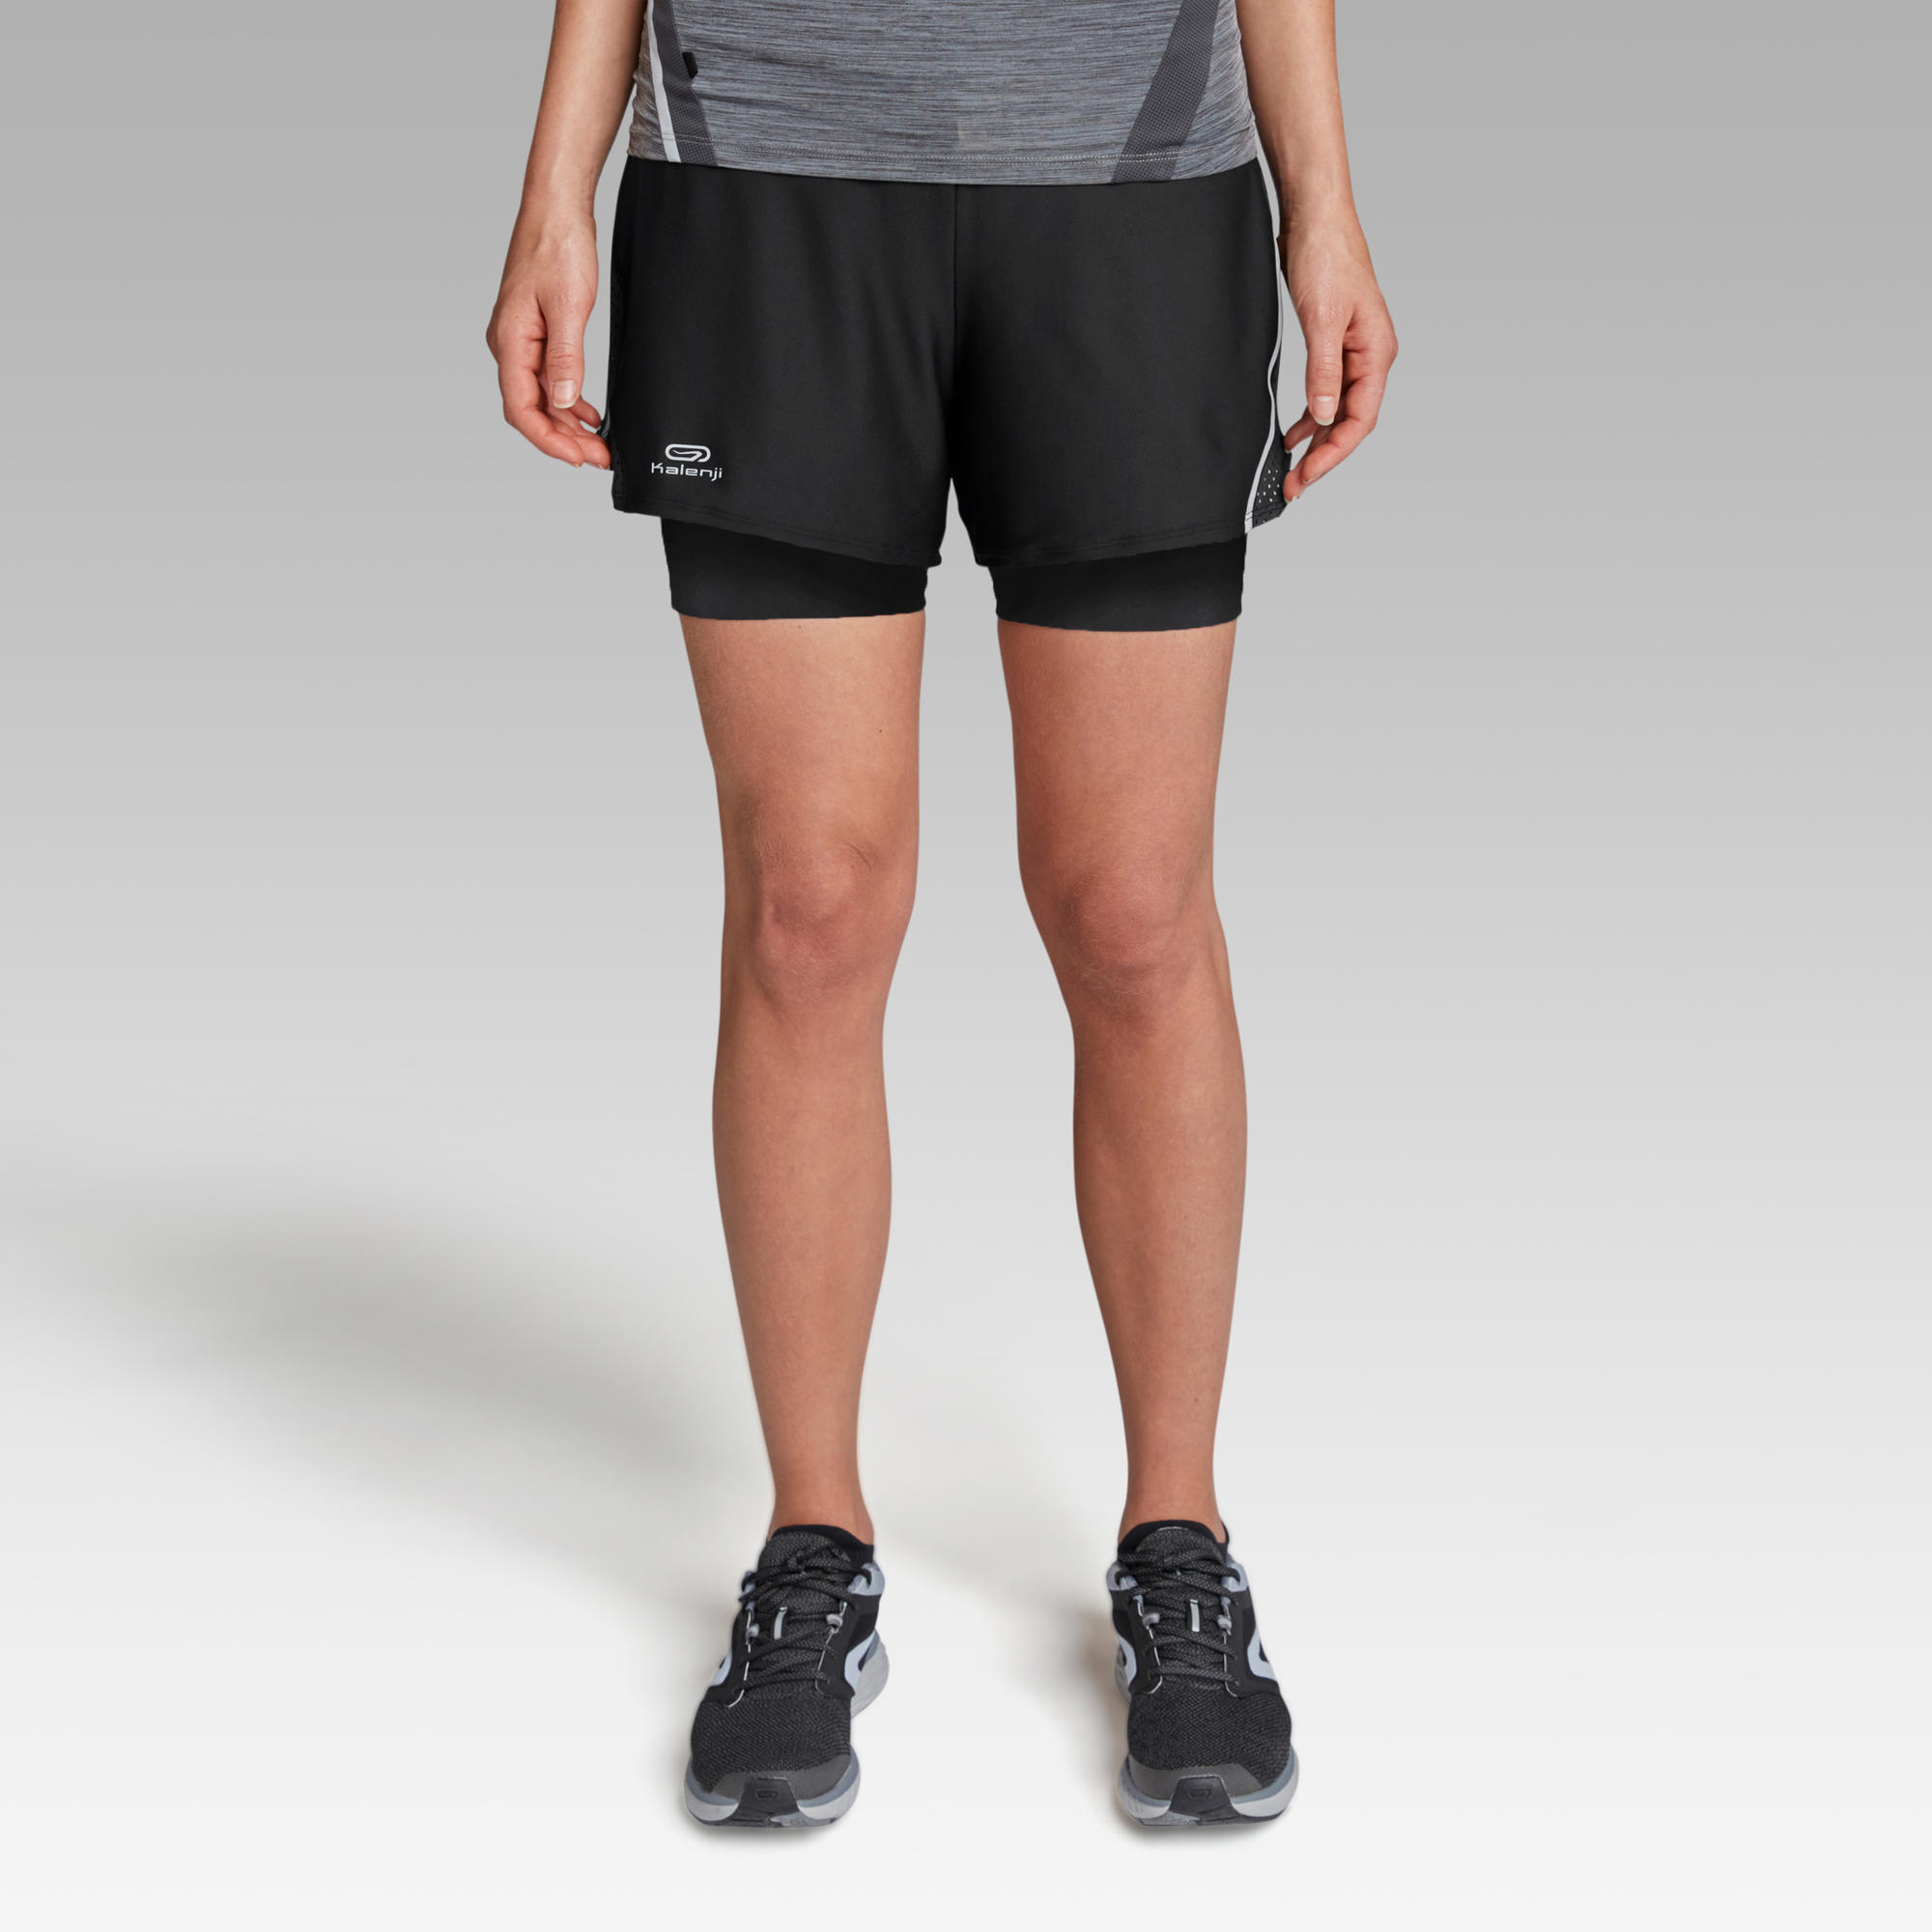 decathlon women's running shorts